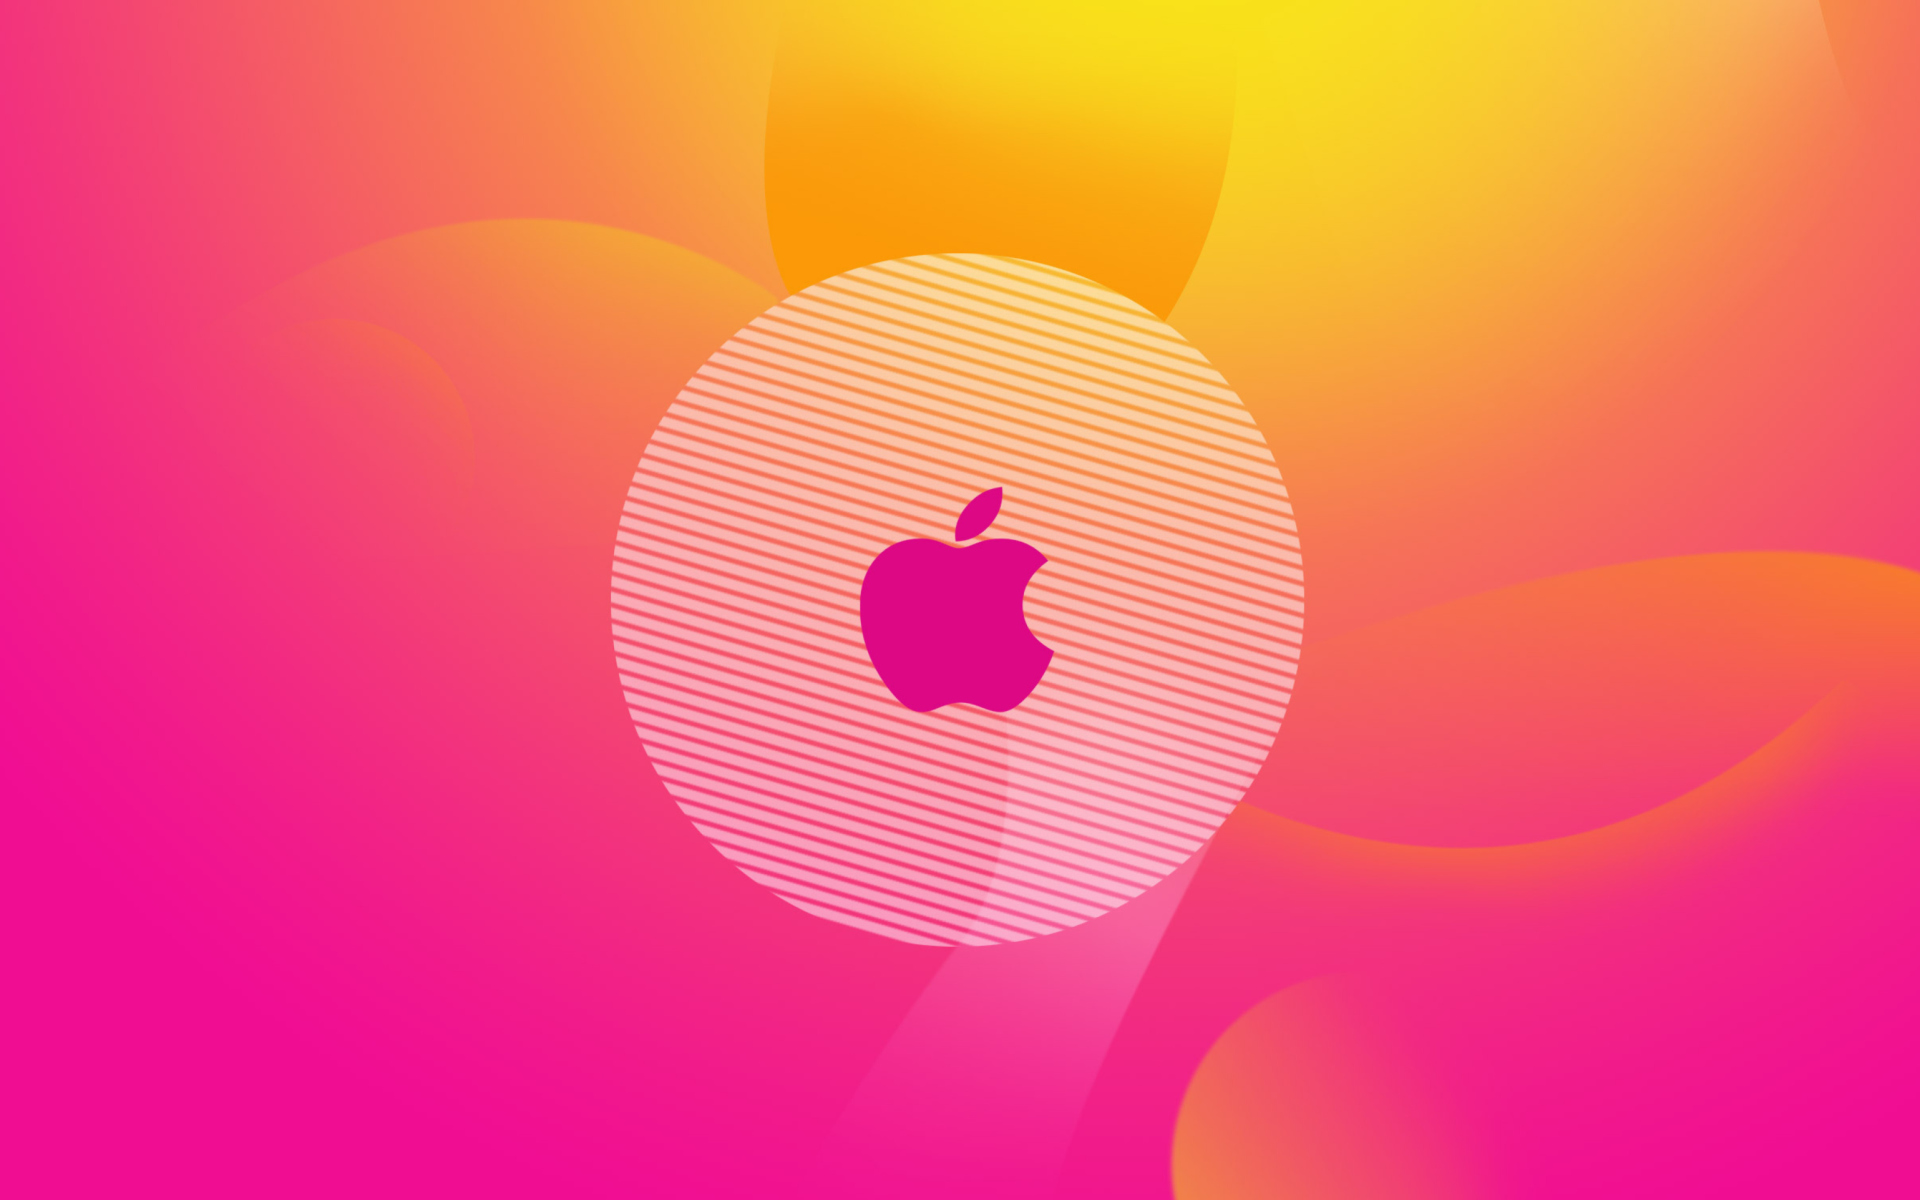 Pinky Apple Logo Wallpaper For Widescreen Desktop Pc